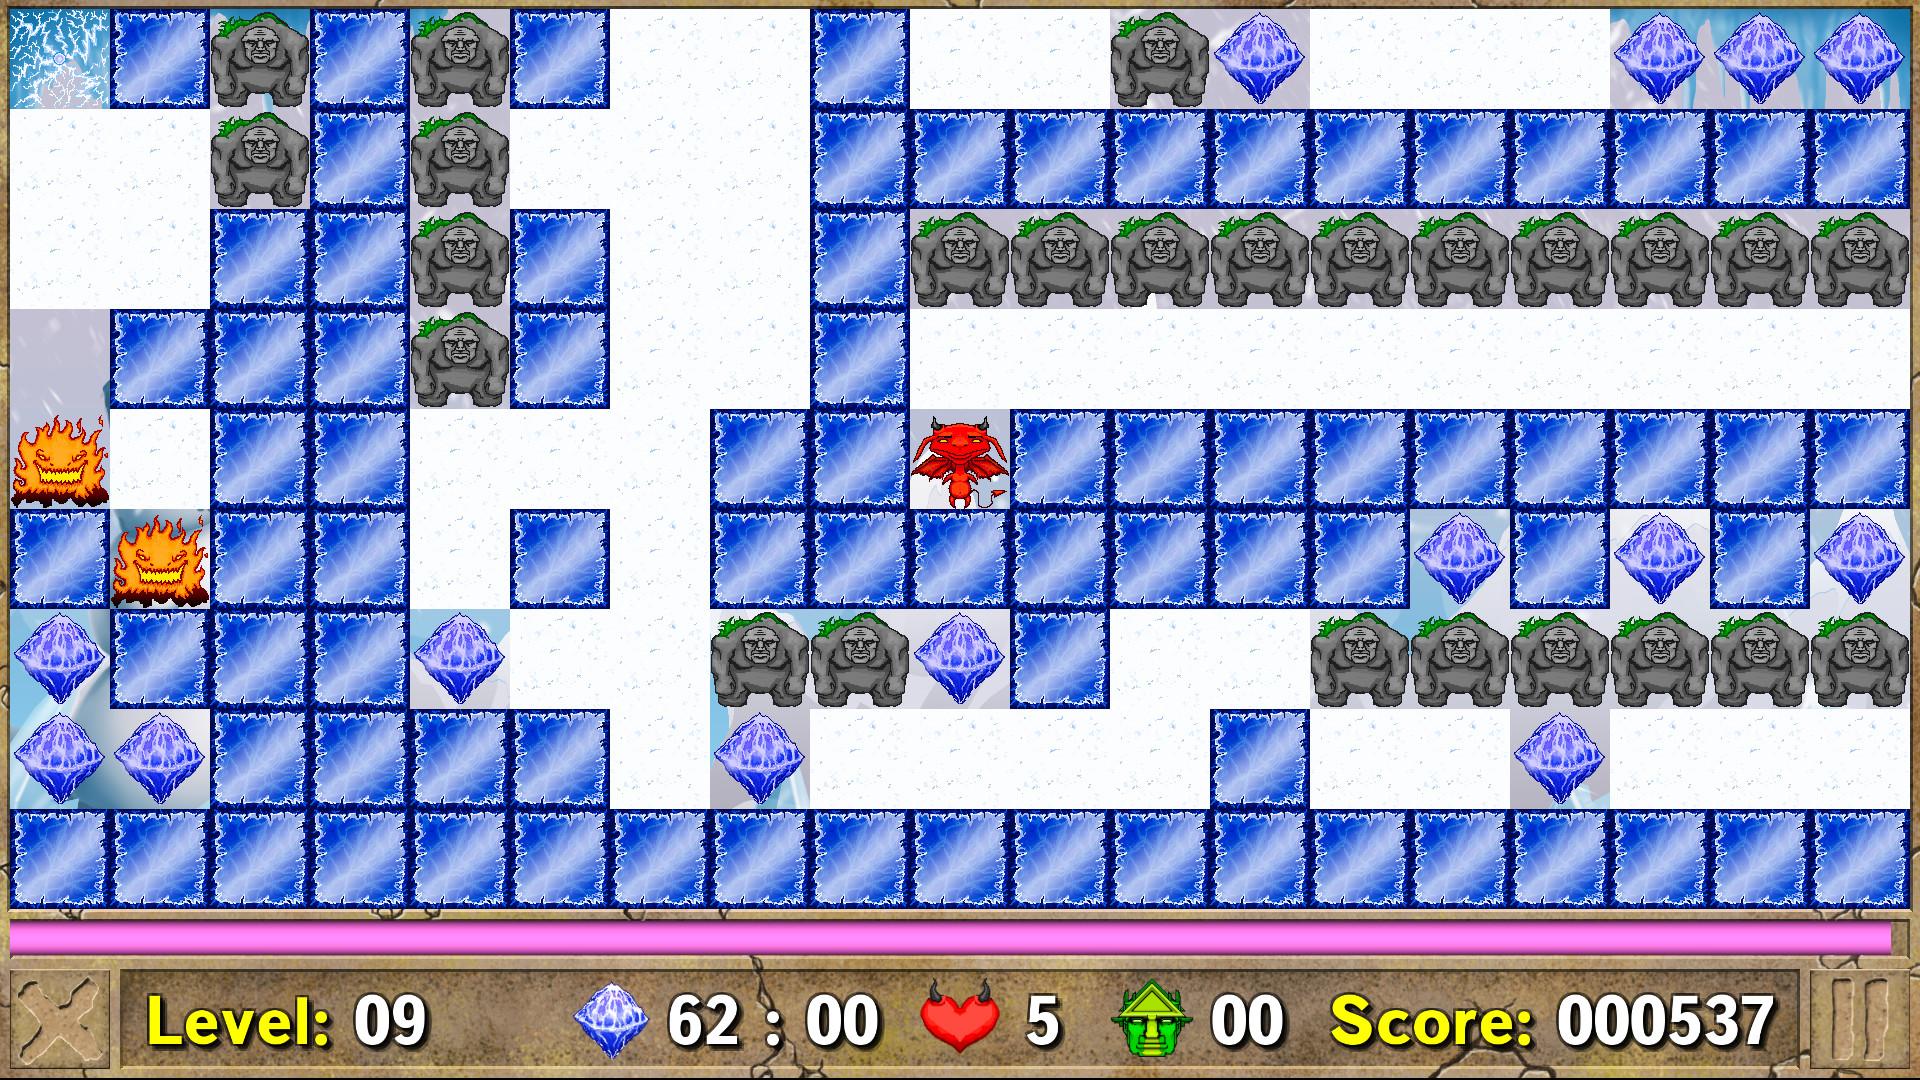 Screenshot №4 from game Elems